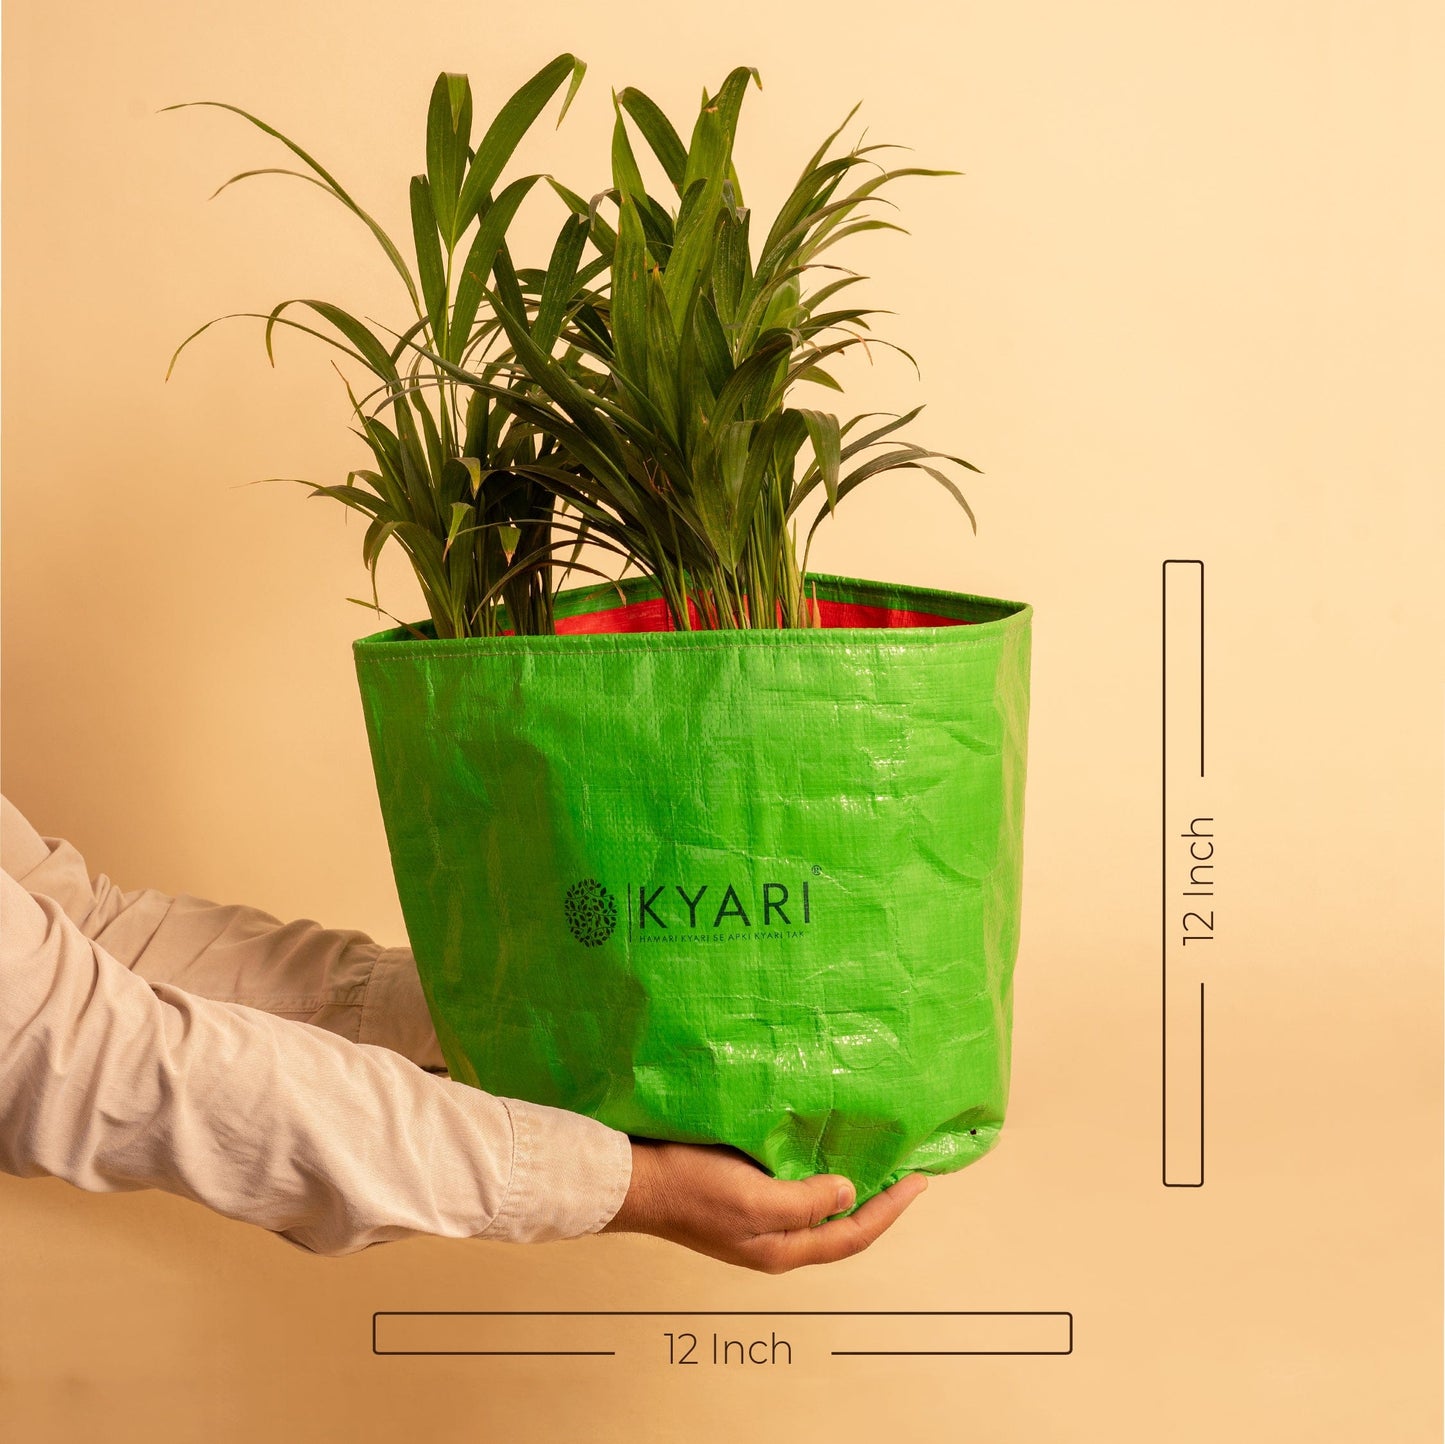 Kyari 260 GSM Grow Bags - 12*12 Inch